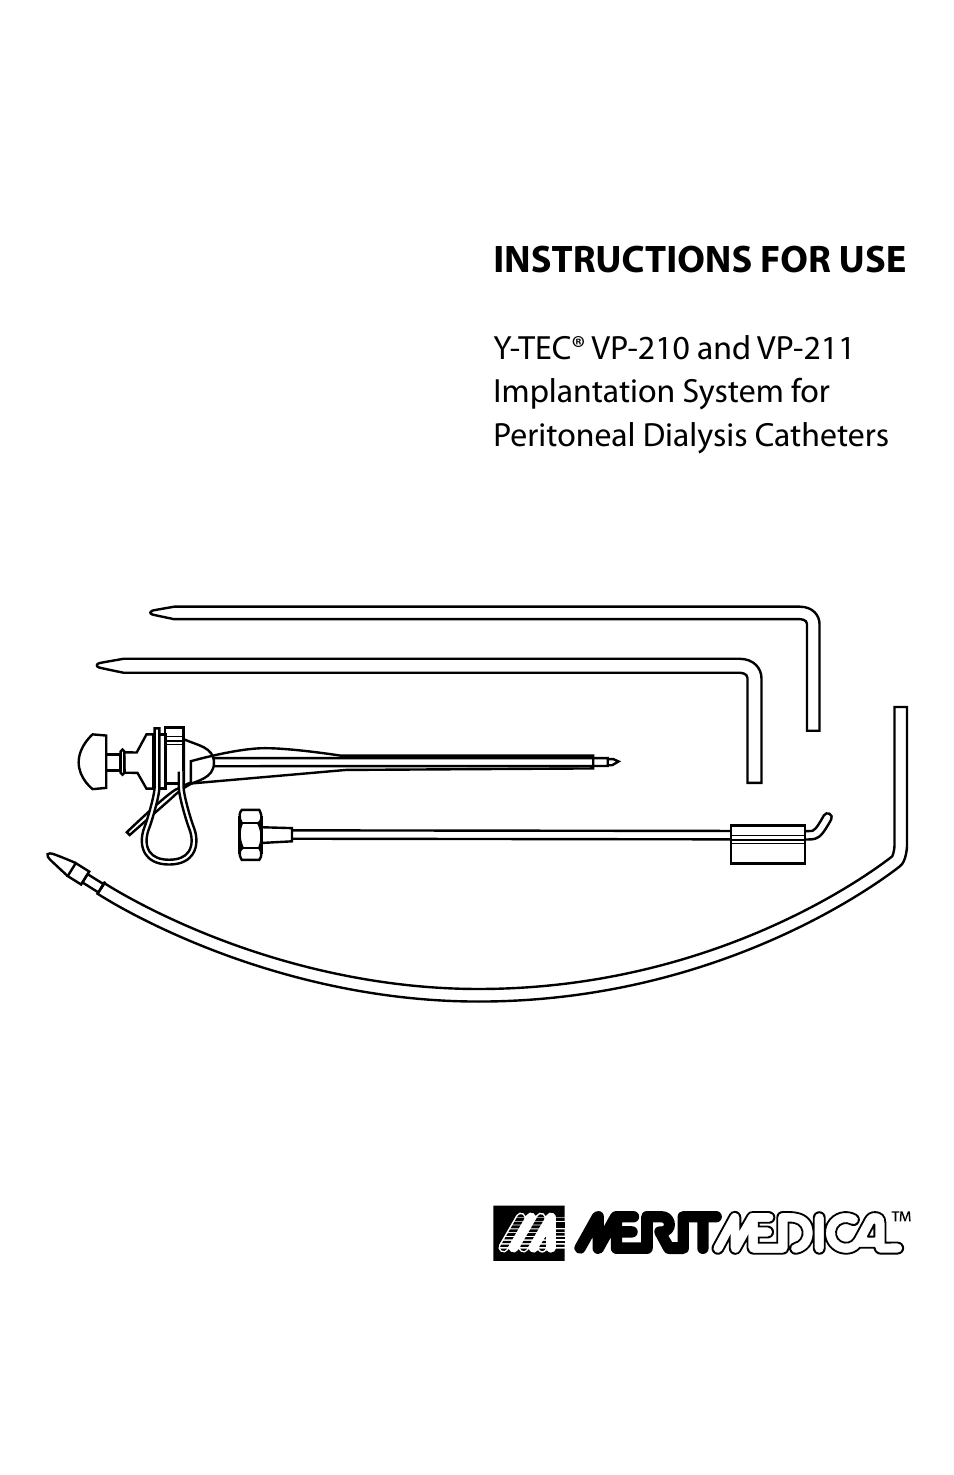 VP-210 PD Catheter Implantation System